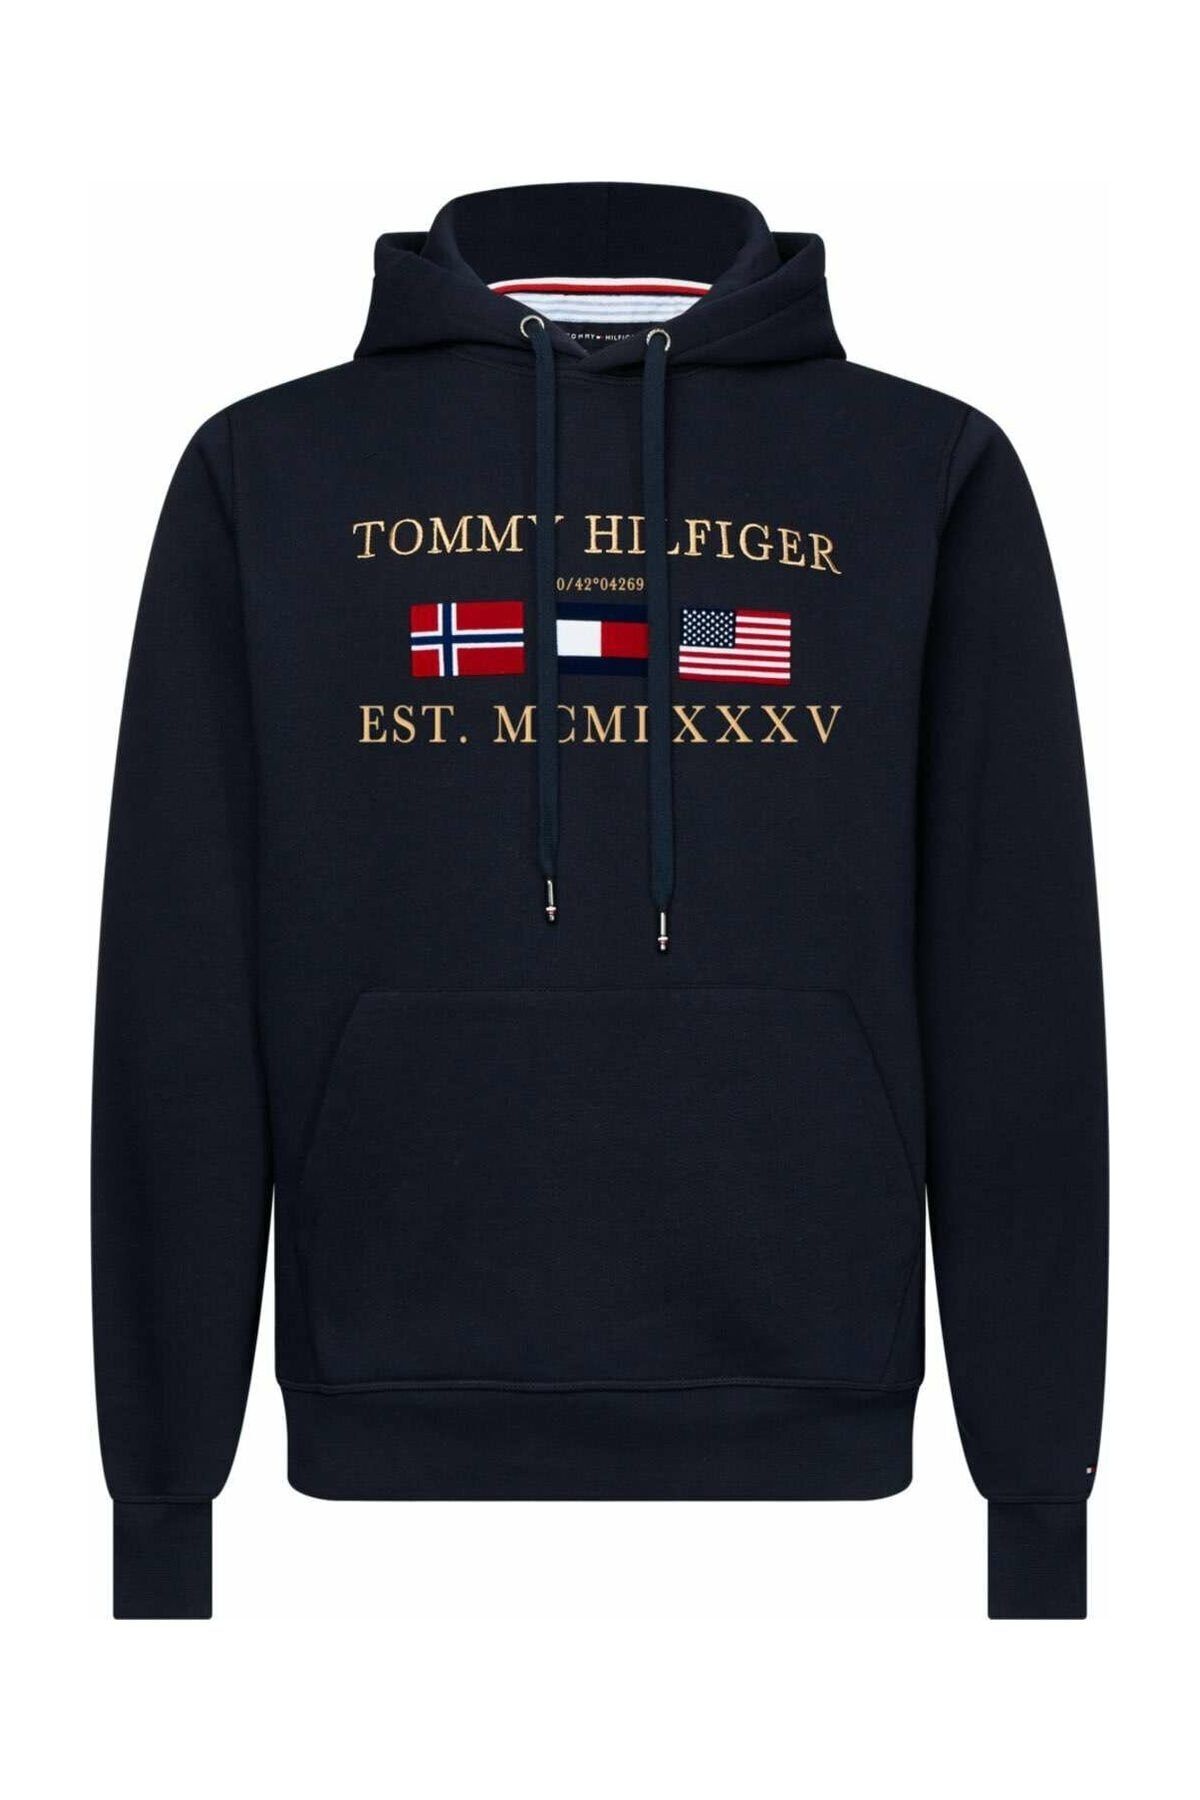 Tommy Hilfiger Erkek Lacivert Multi Flag Hılfıger Hoody Sweatshirt